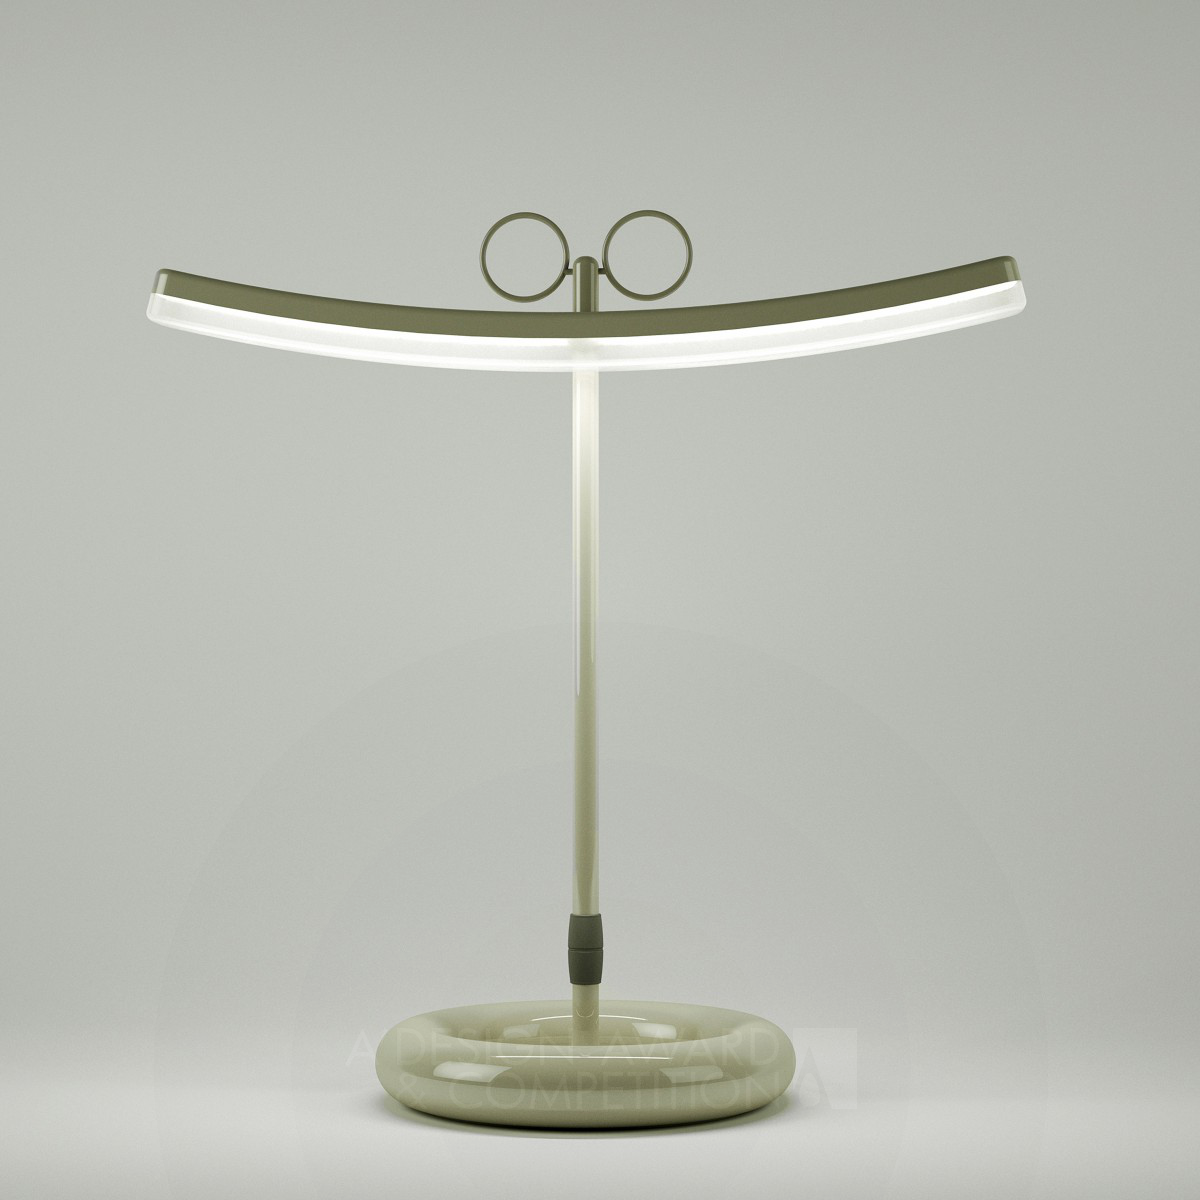 MOODS: A Playful Desk Table Lamp